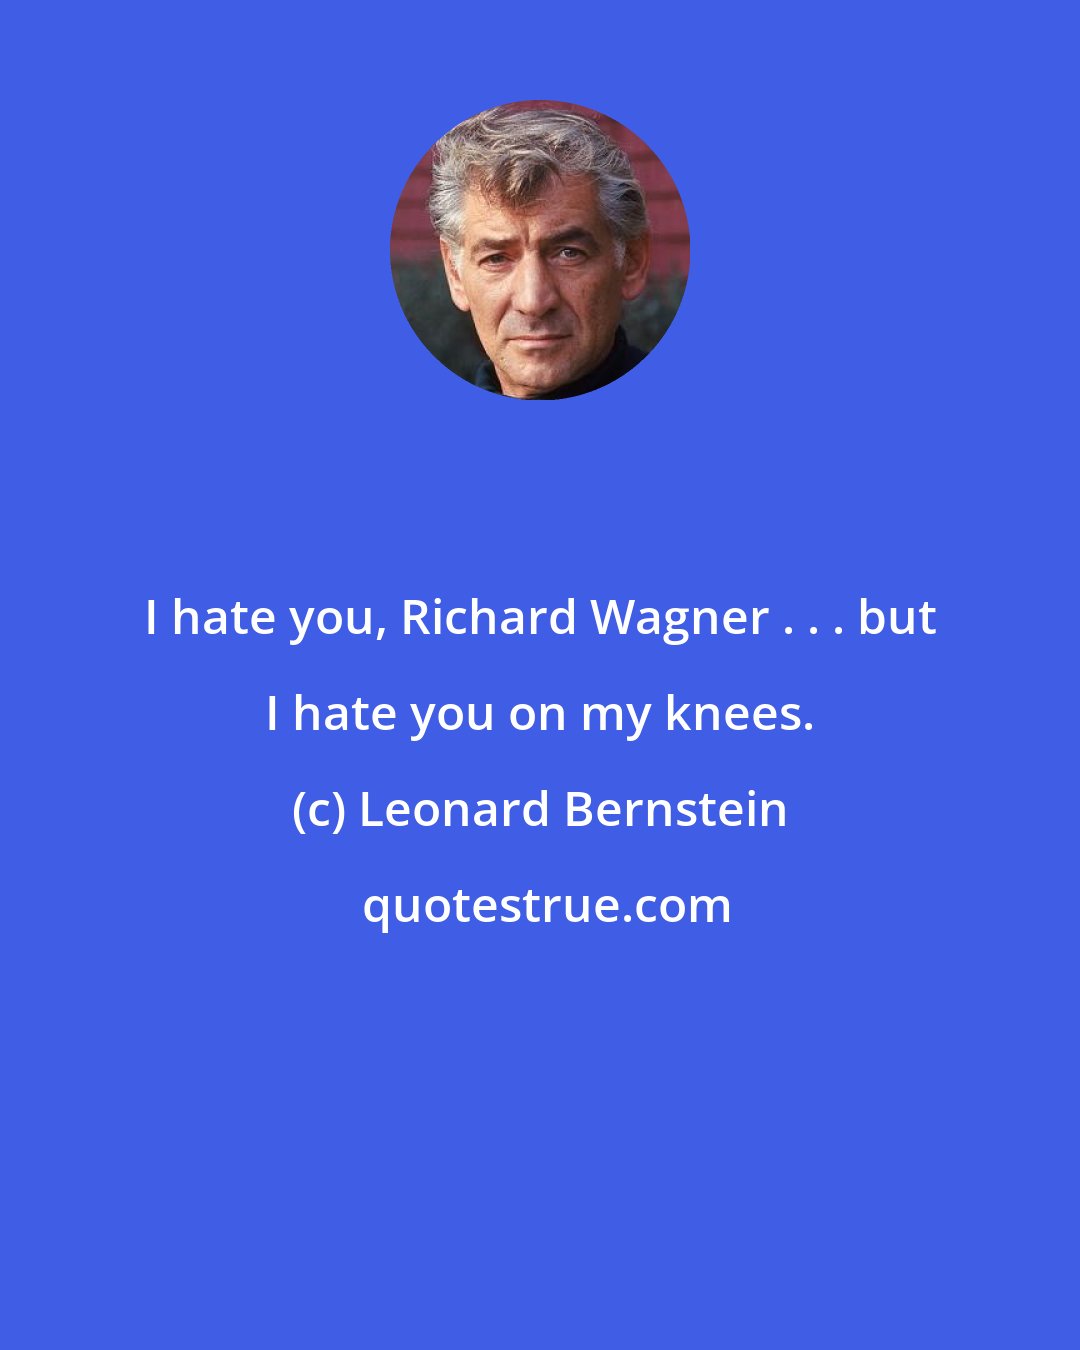 Leonard Bernstein: I hate you, Richard Wagner . . . but I hate you on my knees.